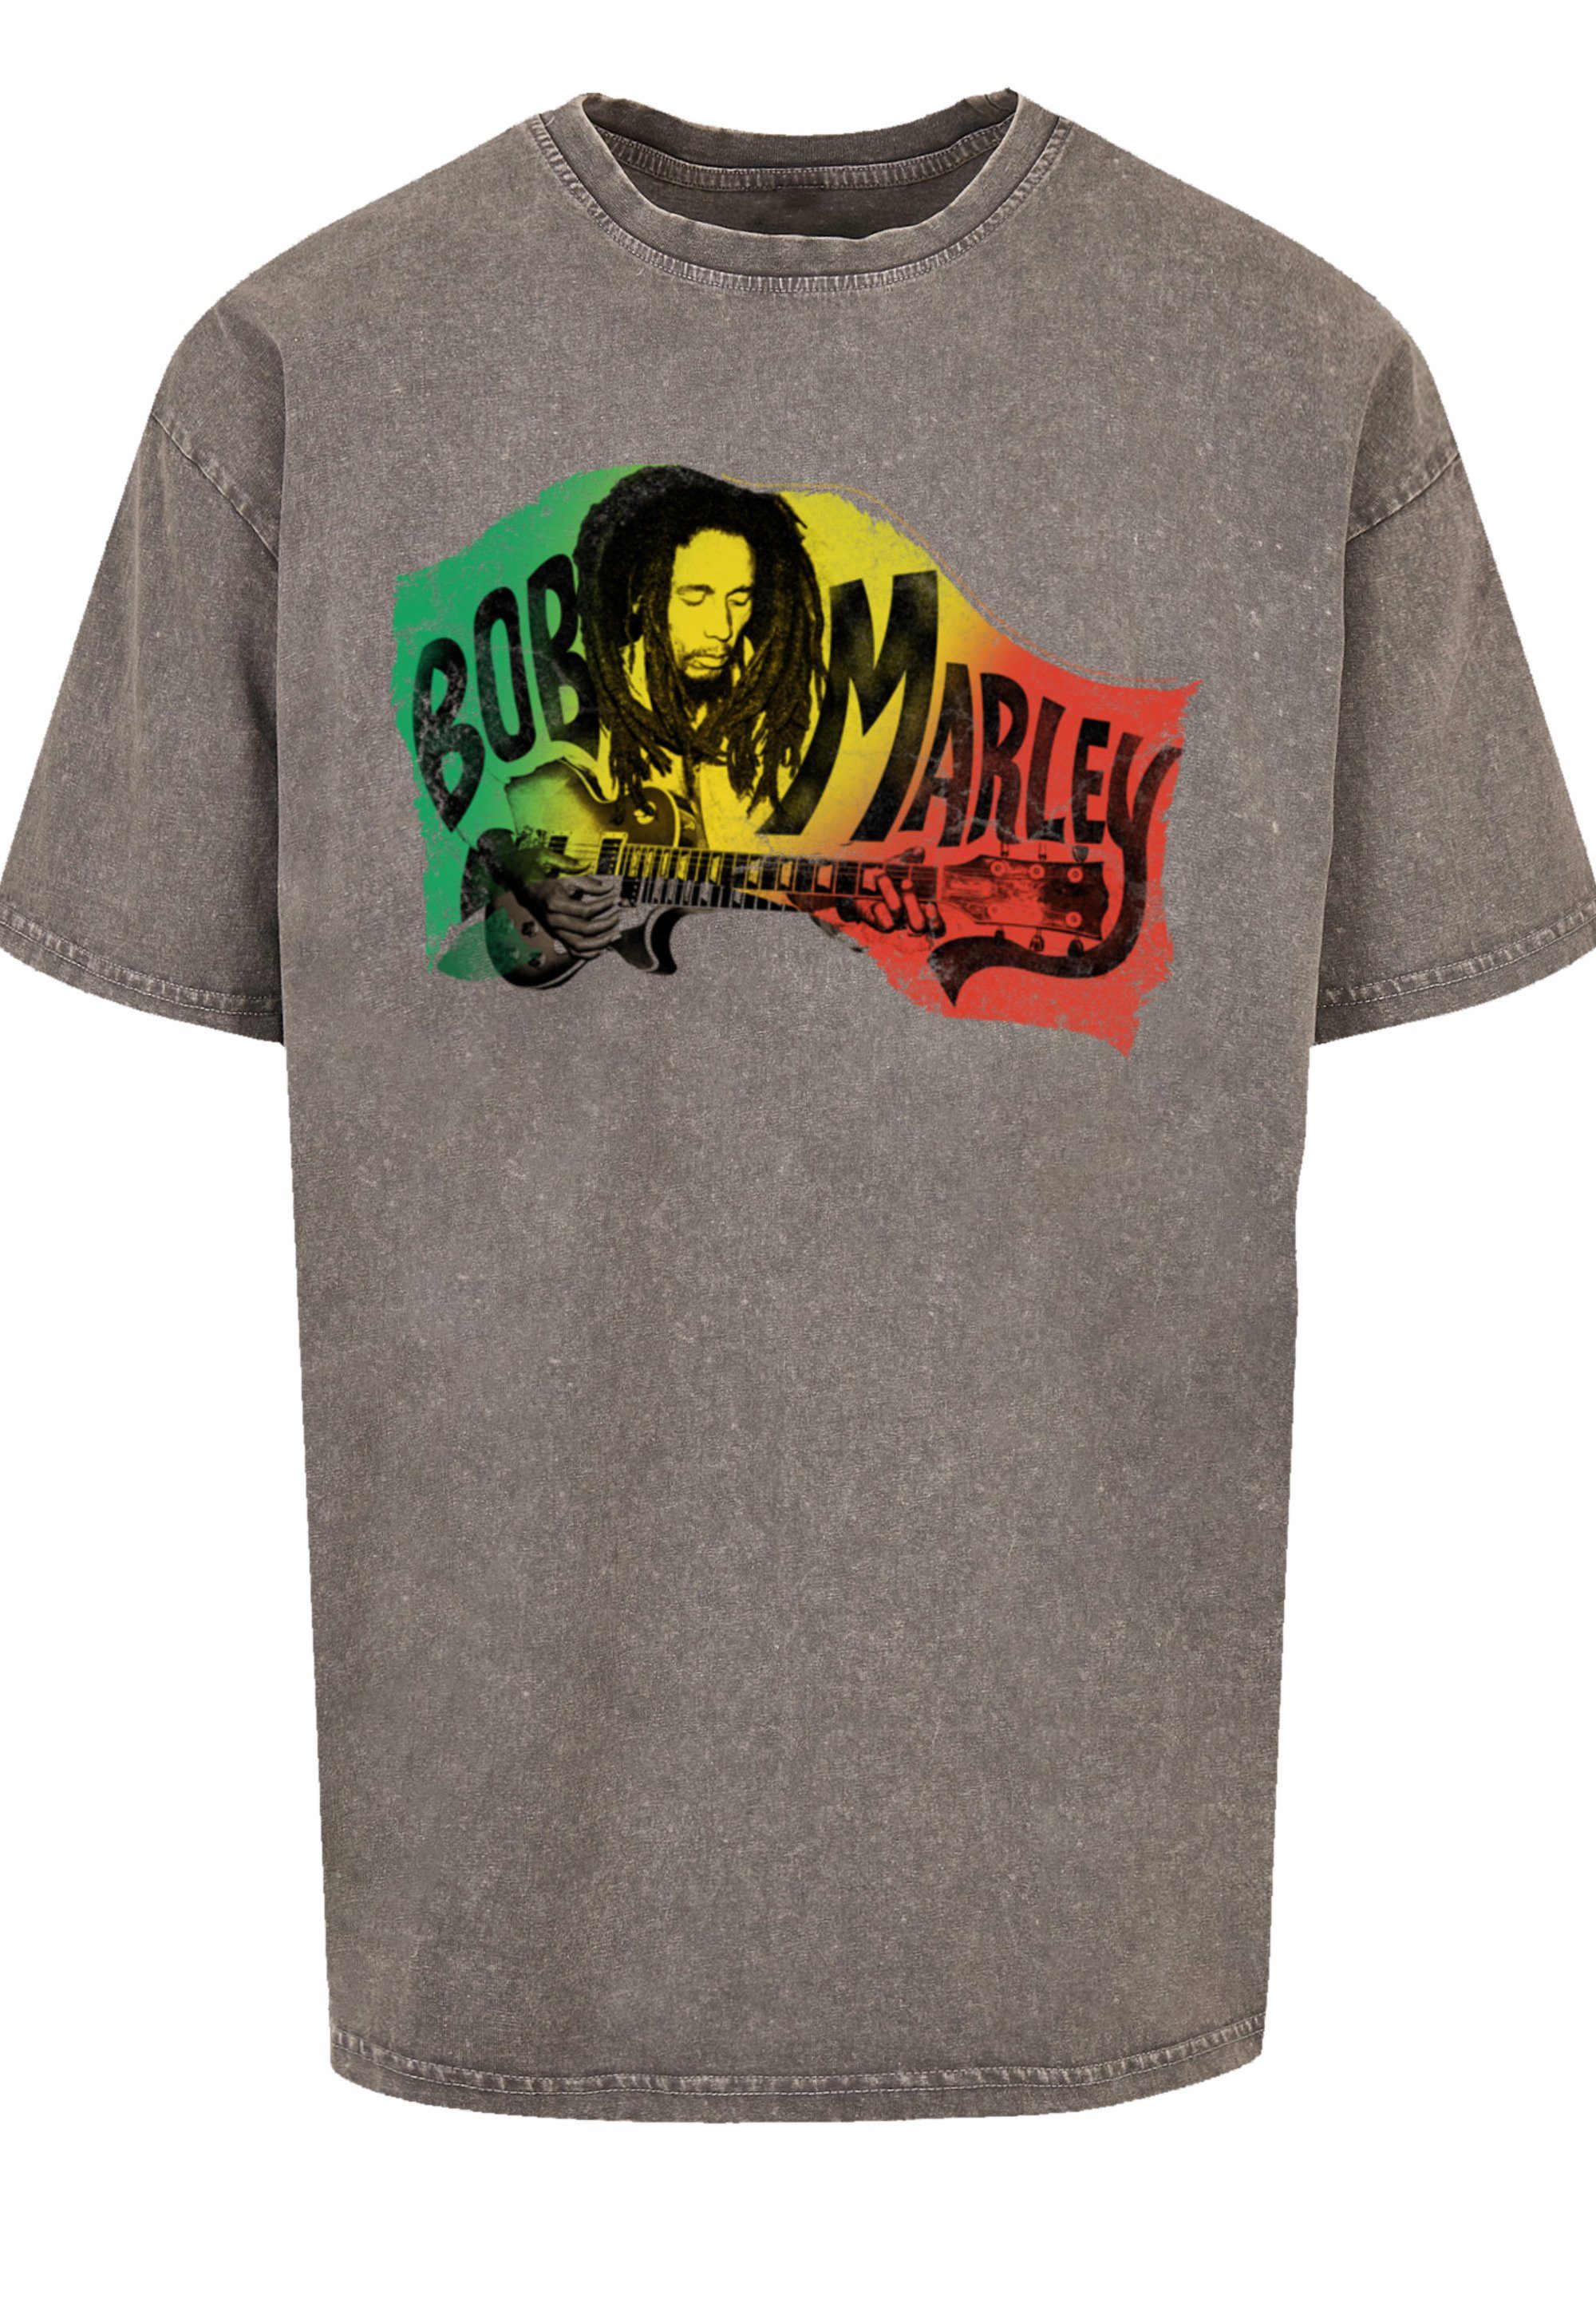 Music Bob Asphalt Premium Rock Off Qualität, Marley T-Shirt F4NT4STIC By Reggae Musik, Chords